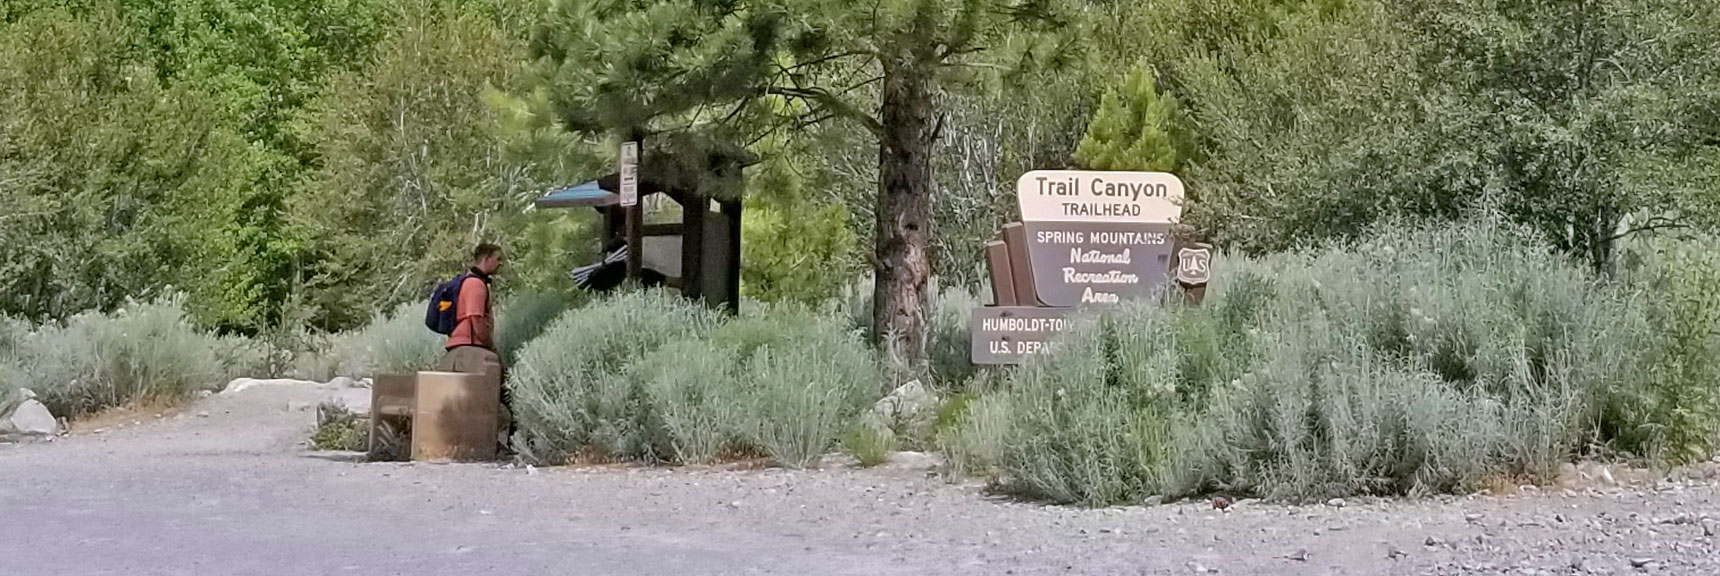 Trail Canyon Trailhead Parking Lot Starting Point for the Six Peak Circuit Adventure | Six Peak Circuit Adventure in the Spring Mountains, Nevada